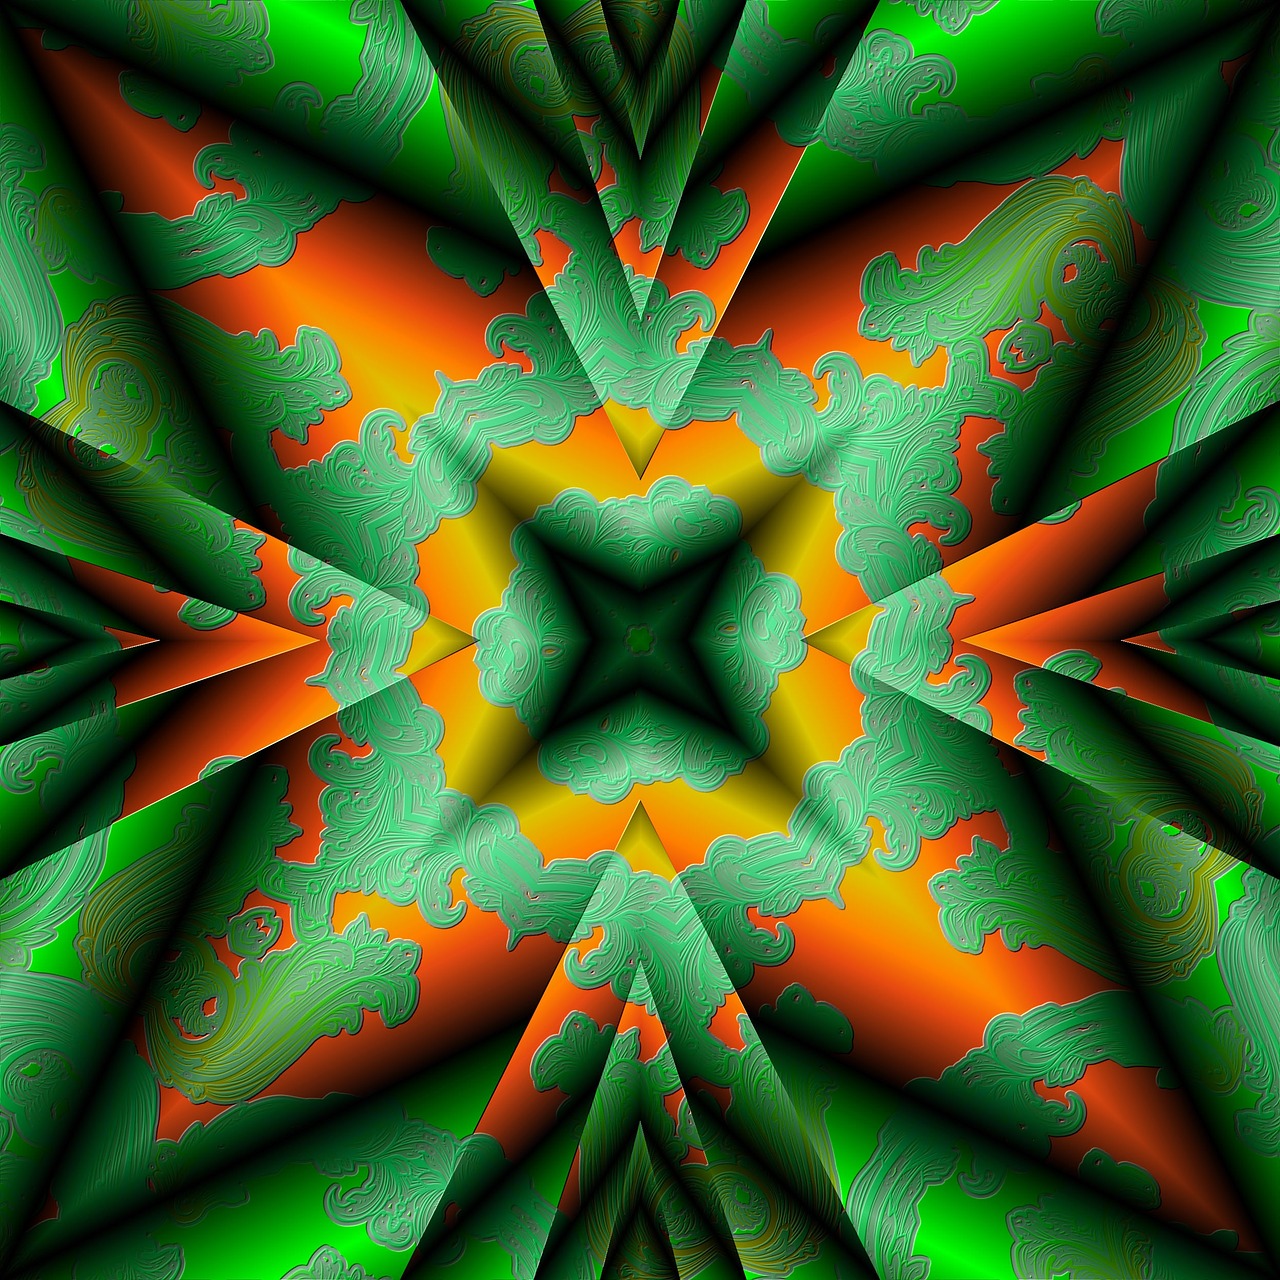 farbenpracht kaleidoscope colorful units free photo